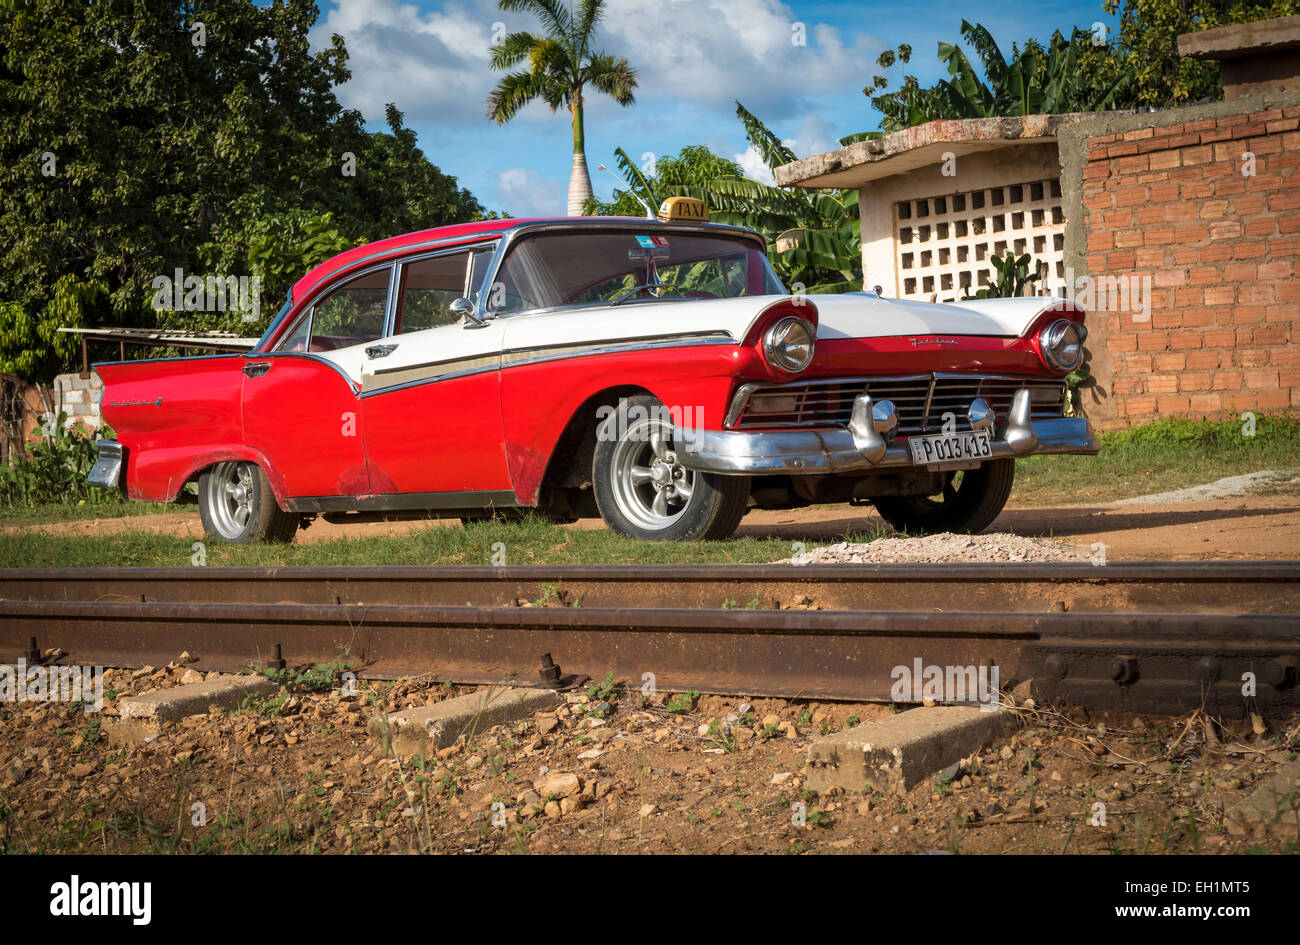 1957 Ford Fairlane classic Americana beside the railway track in Trinidad Cuba. Stock Photo